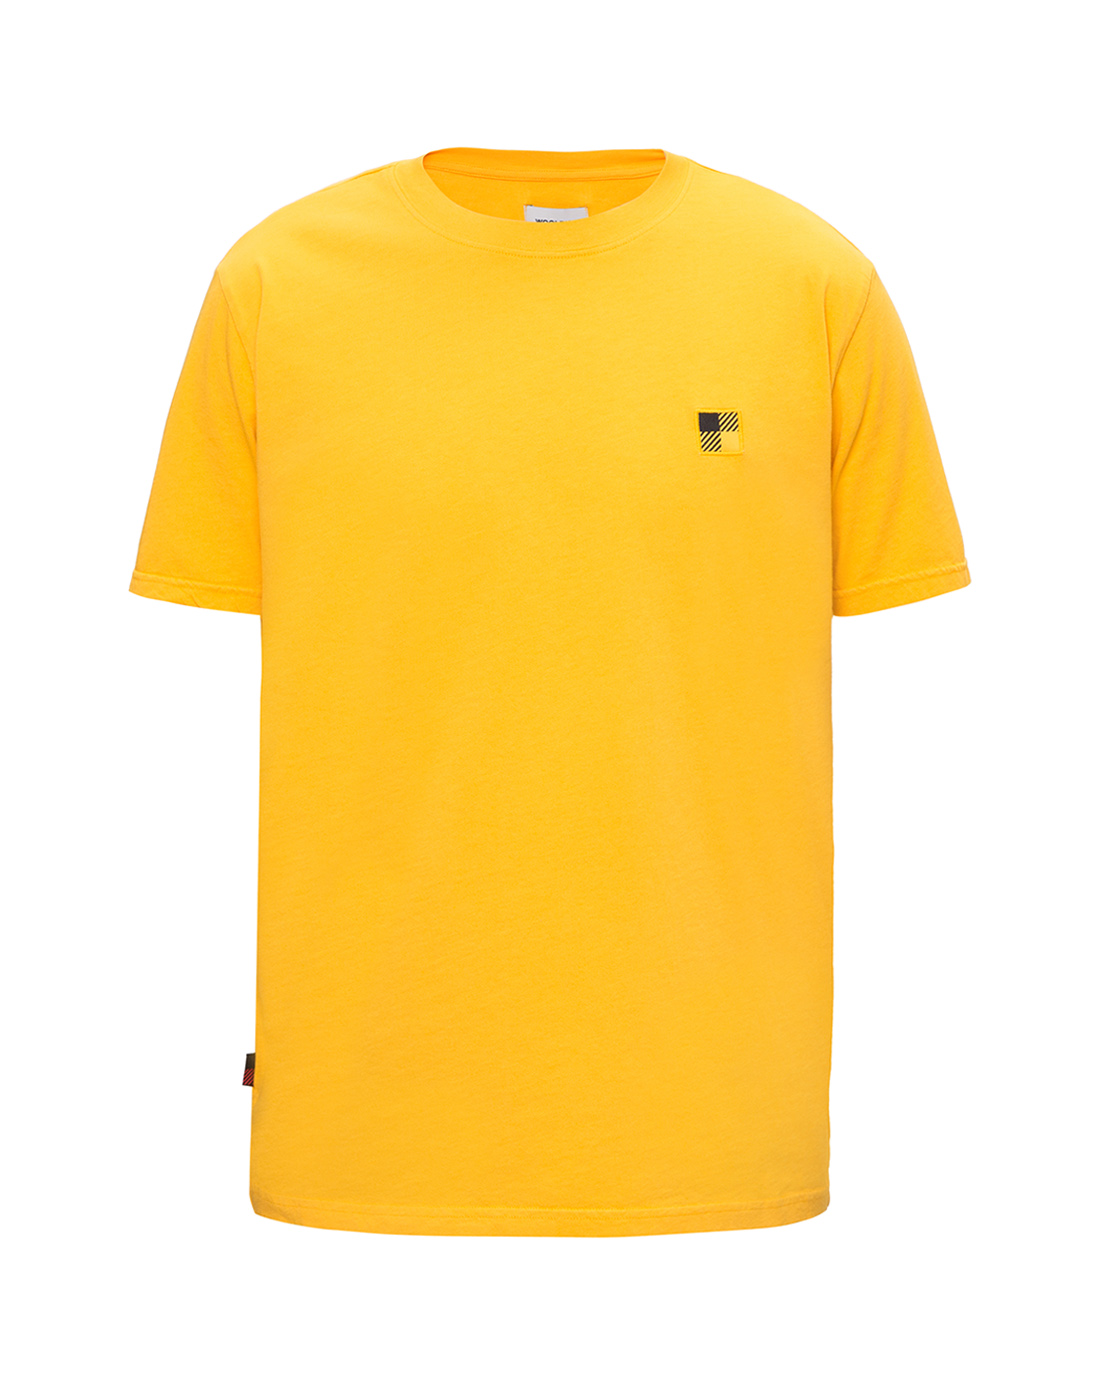 Чоловіча жовта футболка-1